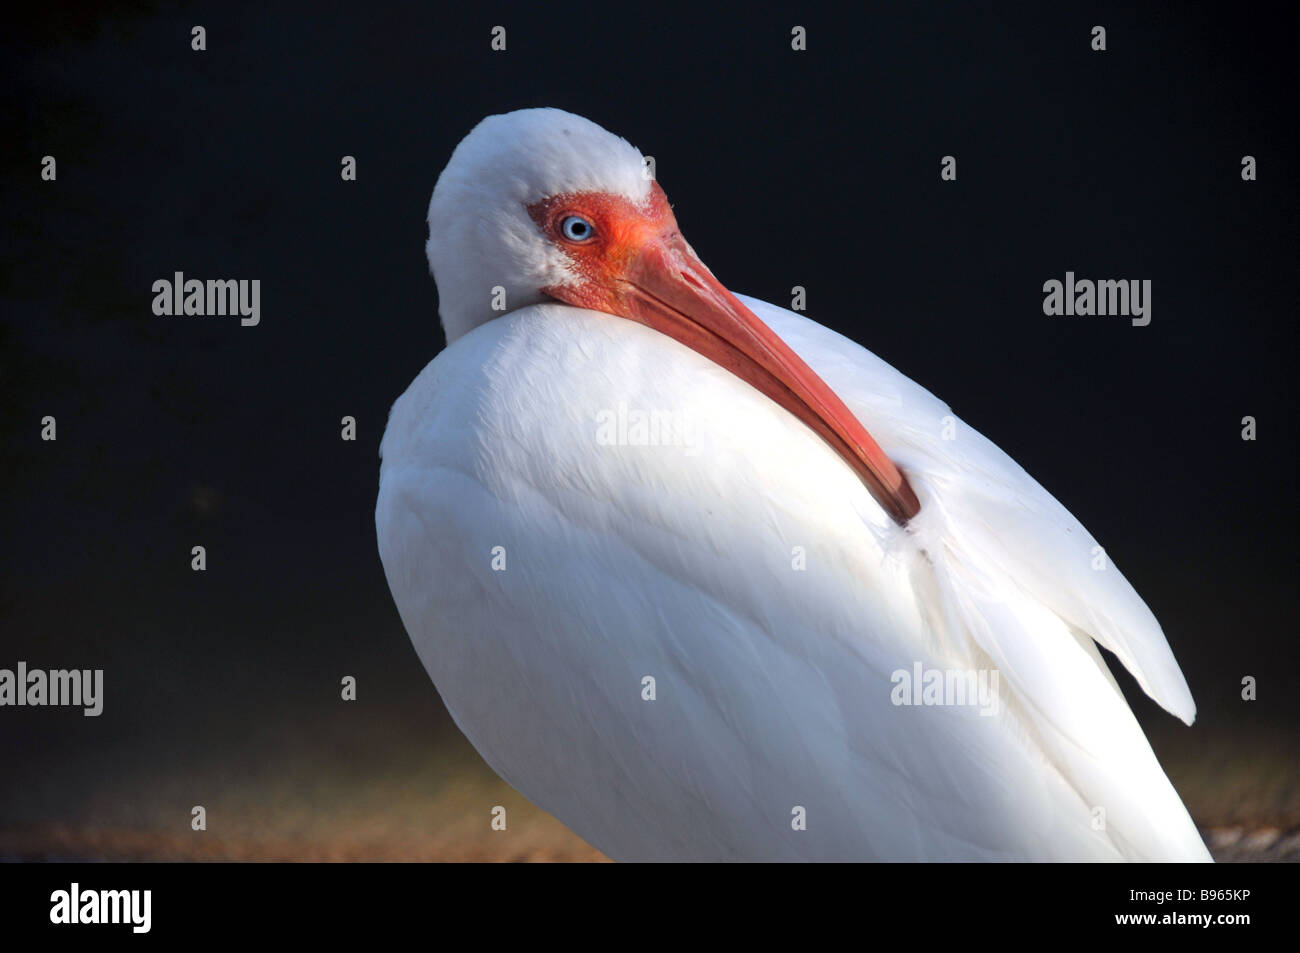 American White Ibis im Rest. Stockfoto